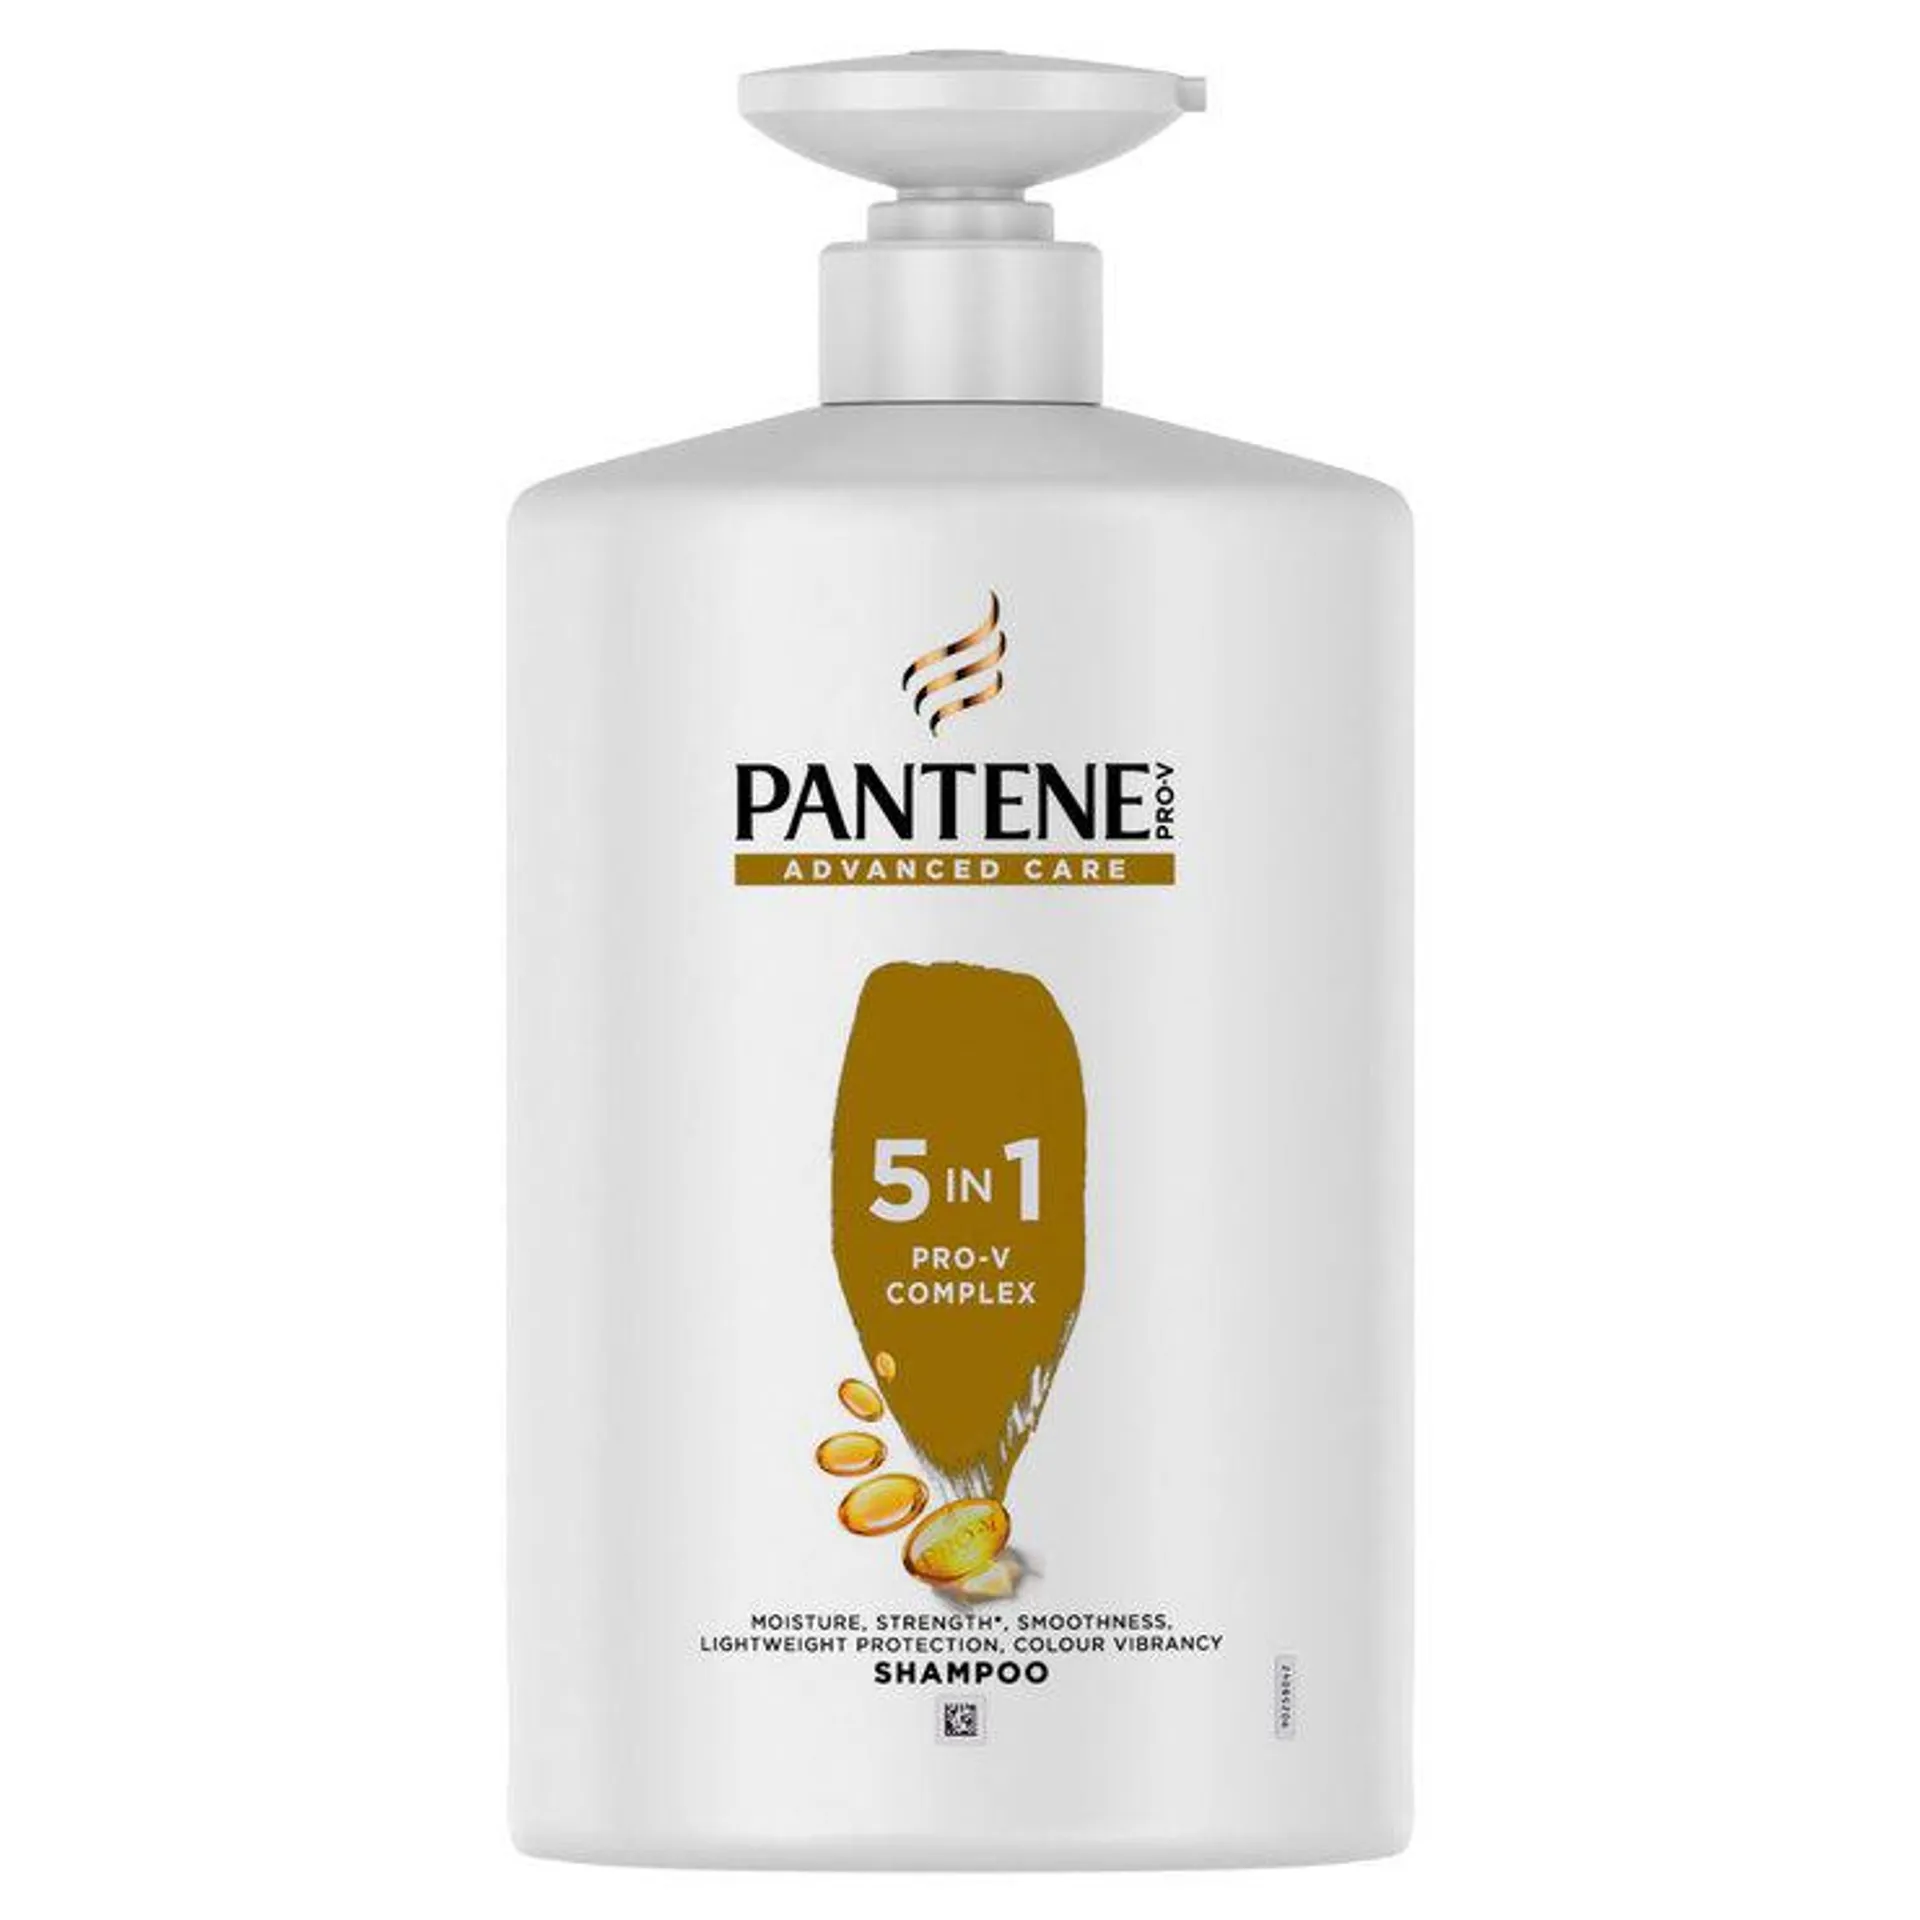 Pantene Advanced Care 5-in-1 Shampoo, 1L